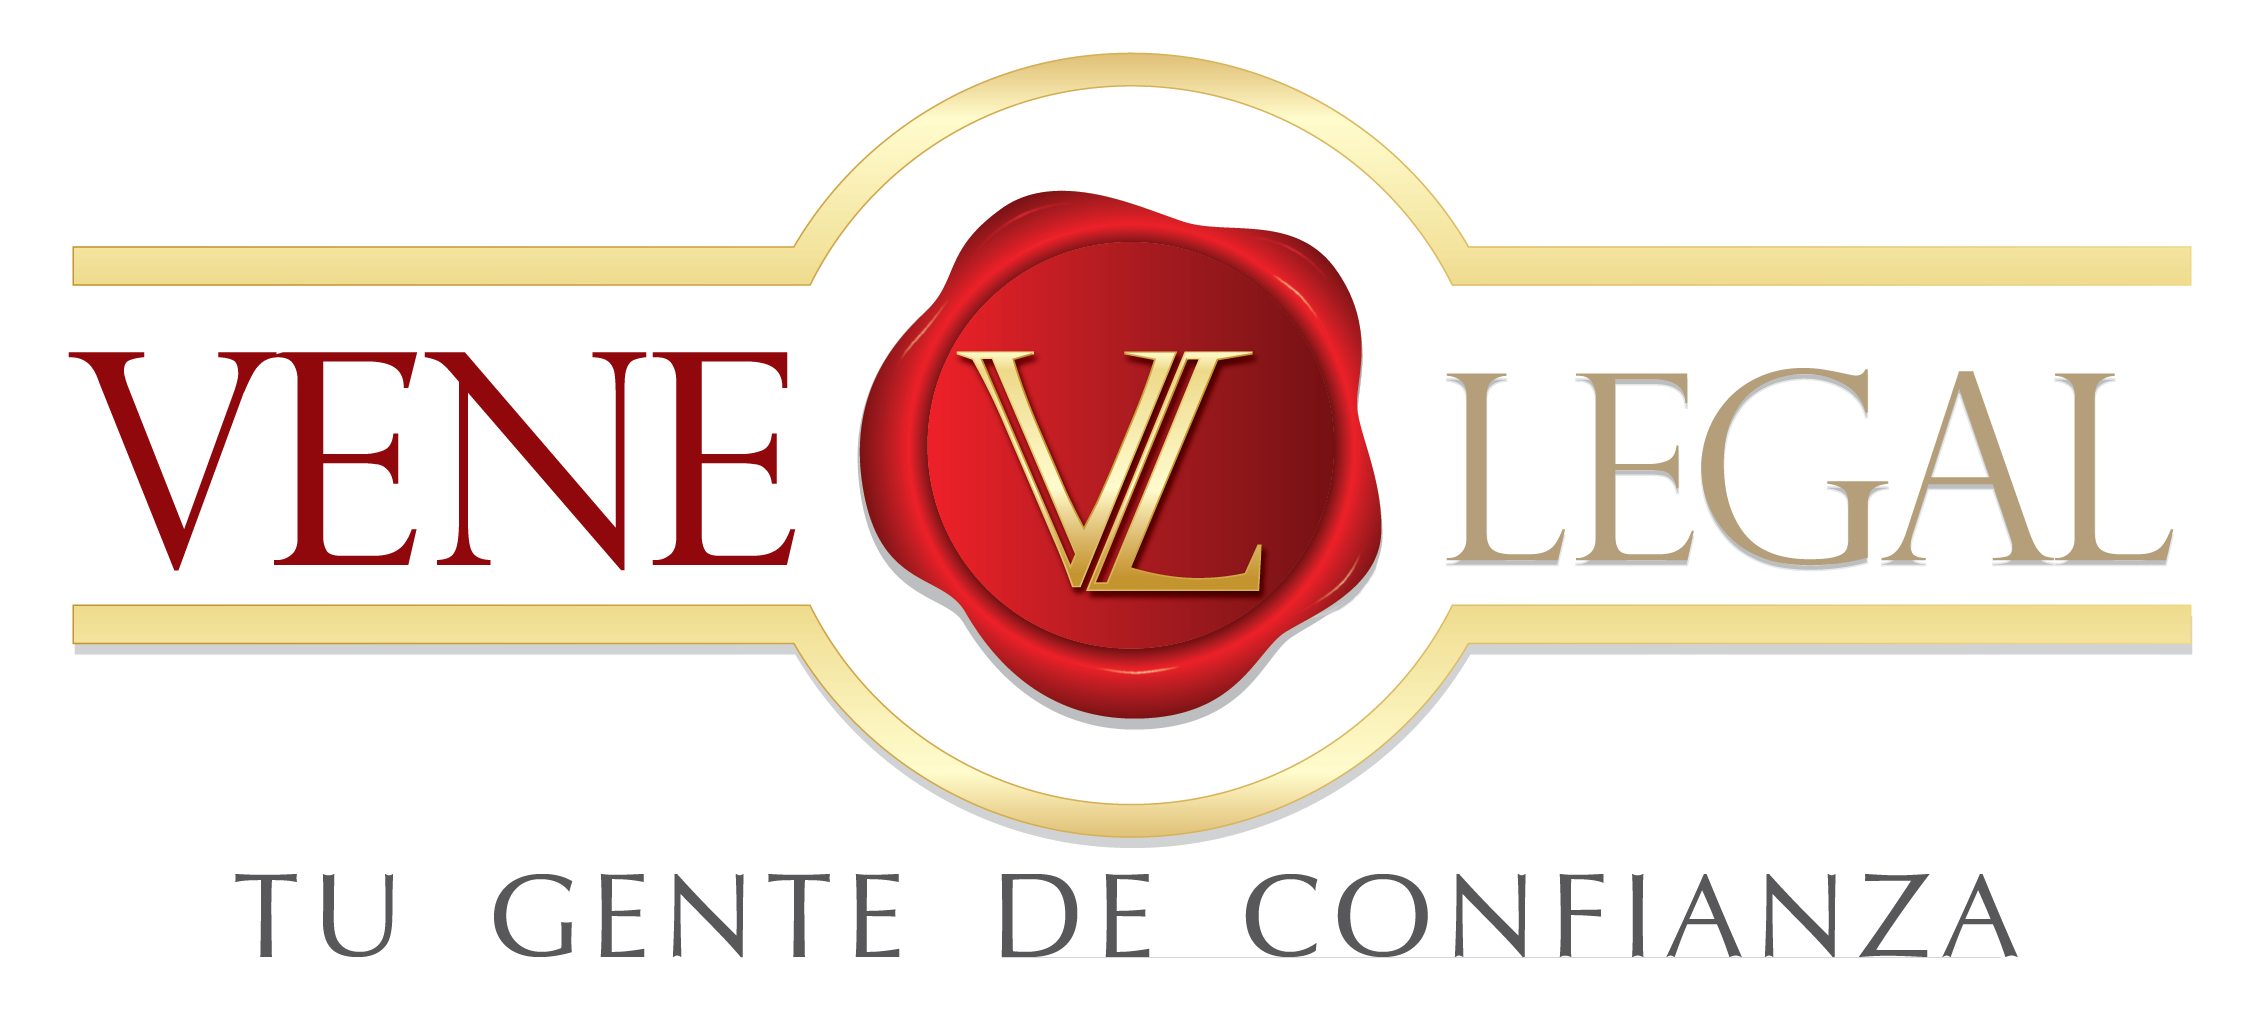 logo venelegal